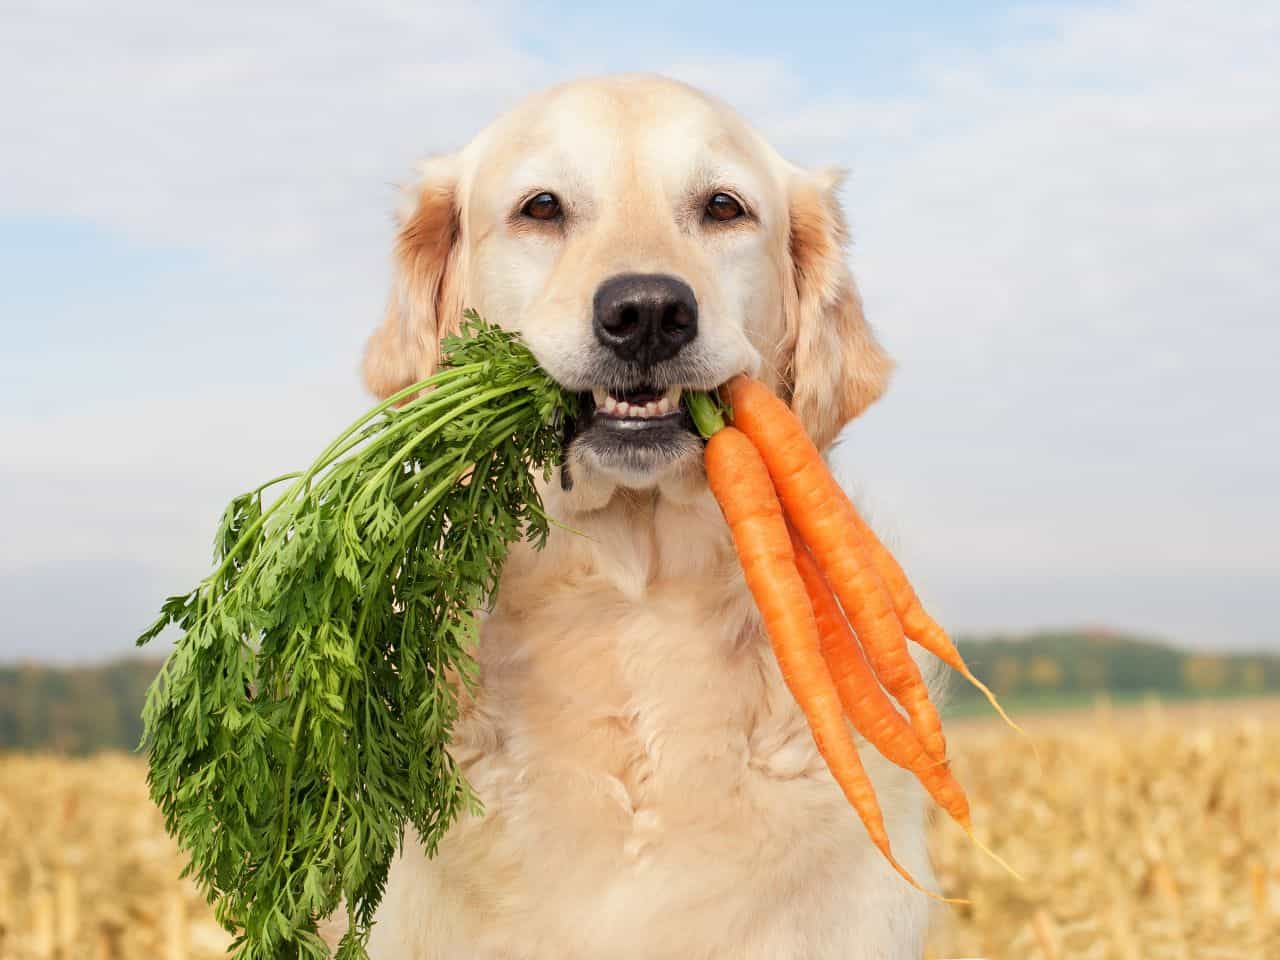 A cute golden retreiver holding carrots.